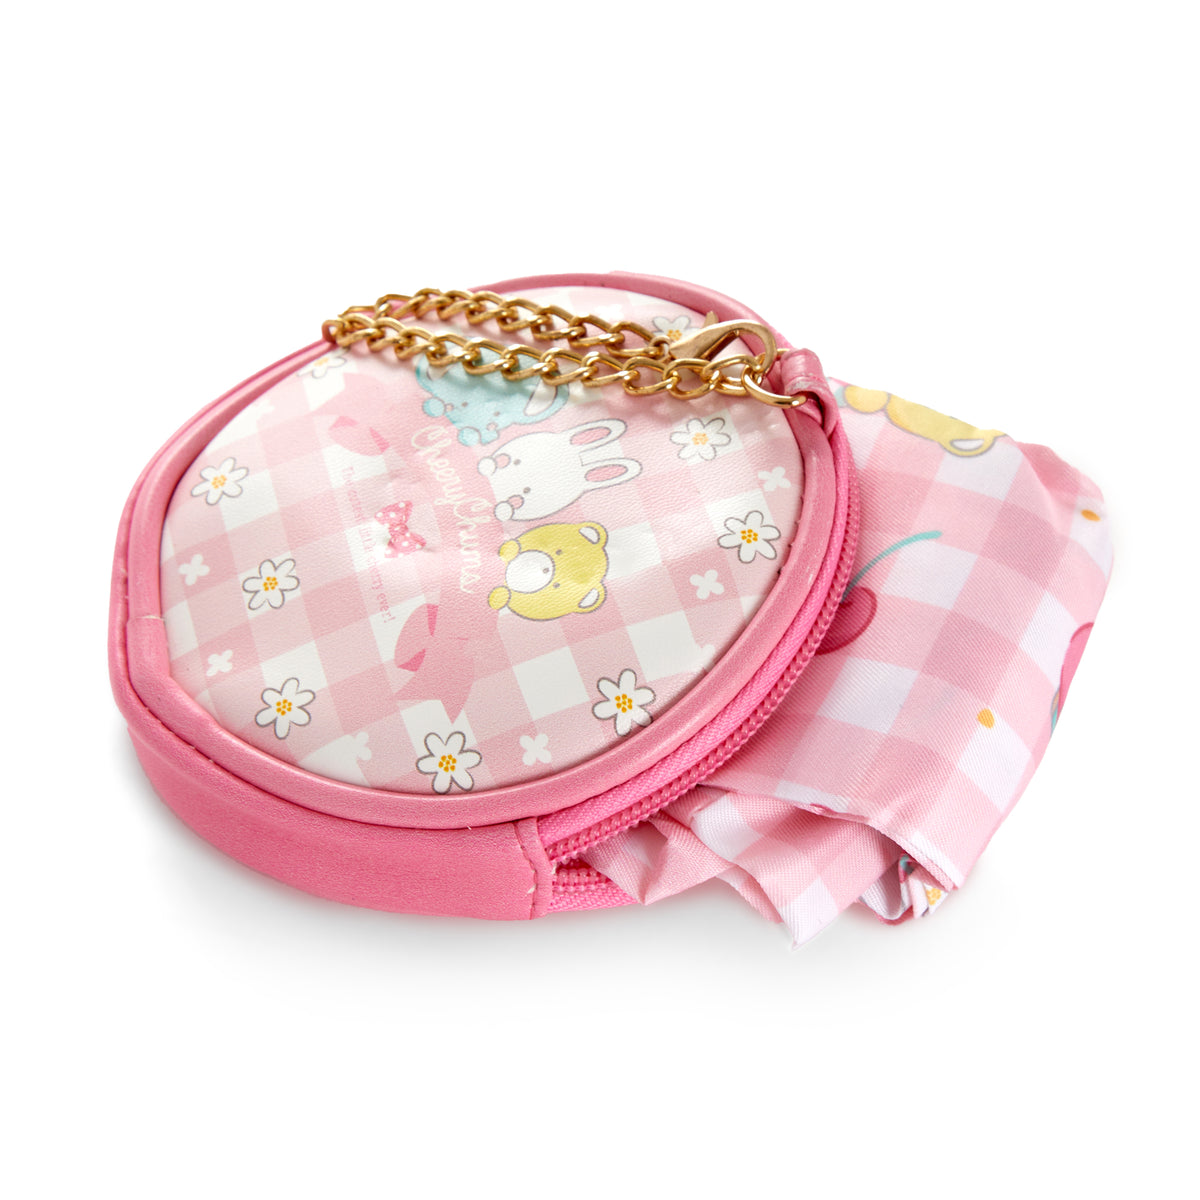 Sanrio Cherry Chums tote bag rabbit pink vinyl material 2015 Sanrio Japan